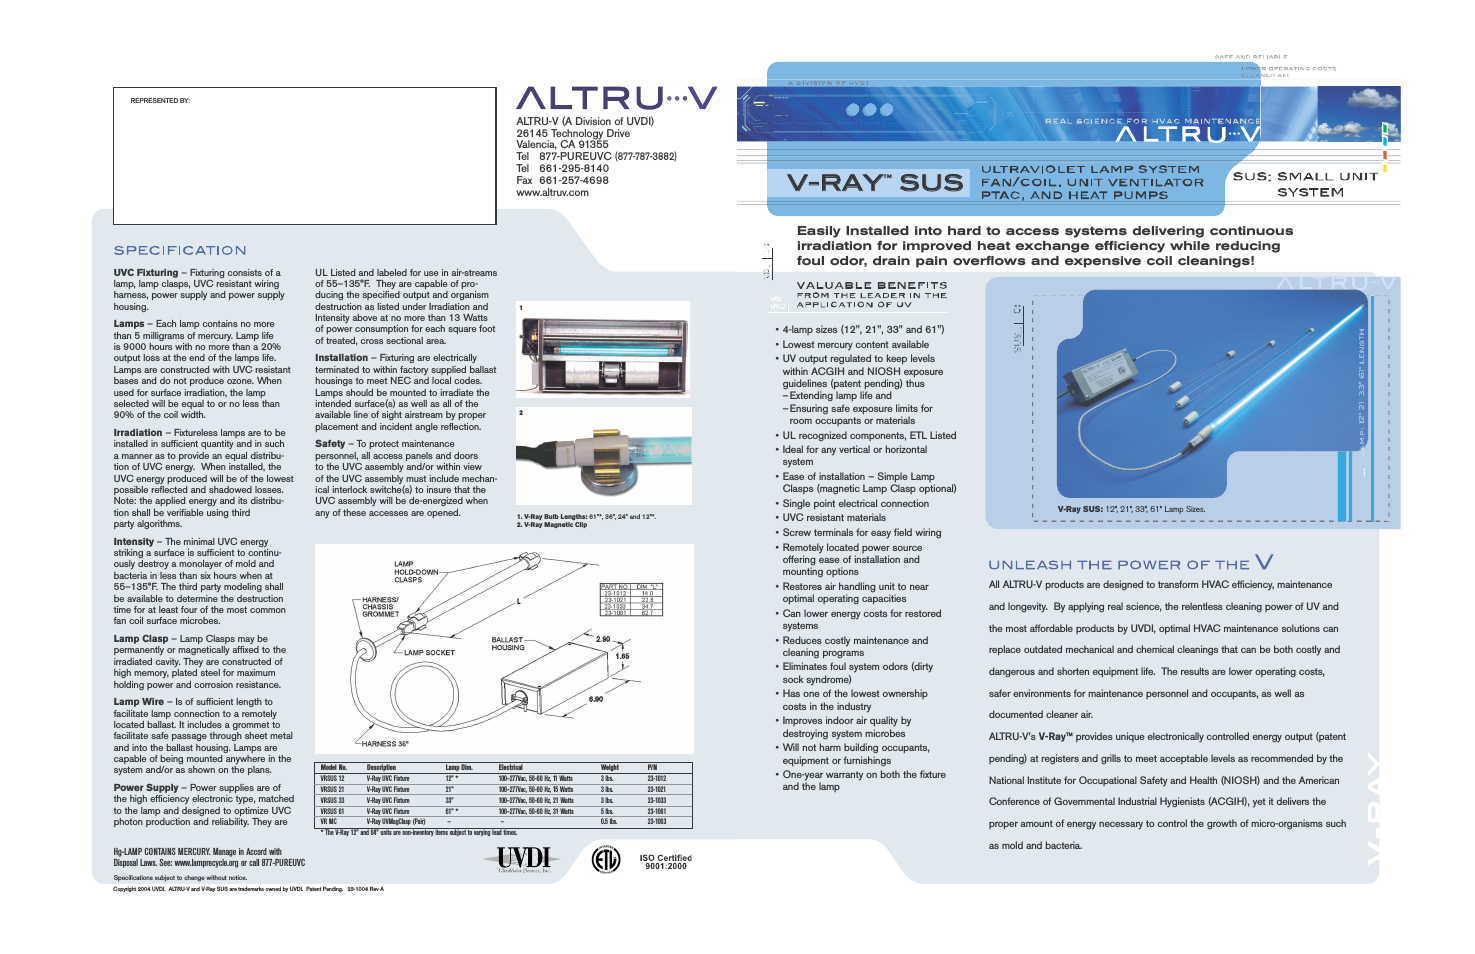 Altru-V Ultravoilet Lamp System